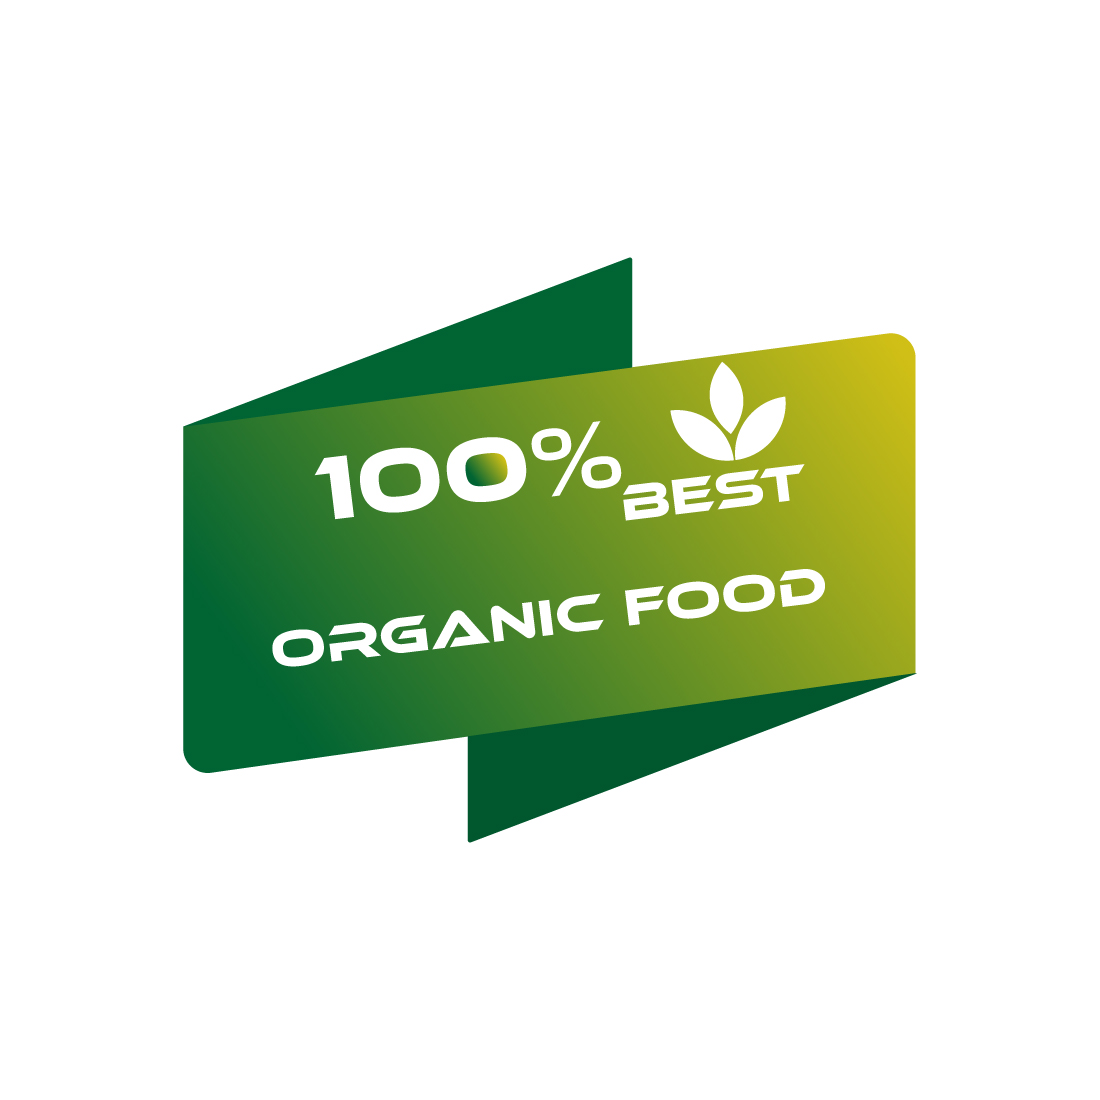 professional Organic food logo design vector images Natural Food logo design, Halal food logo design Green leaf logo icon design Vigan food logo preview image.